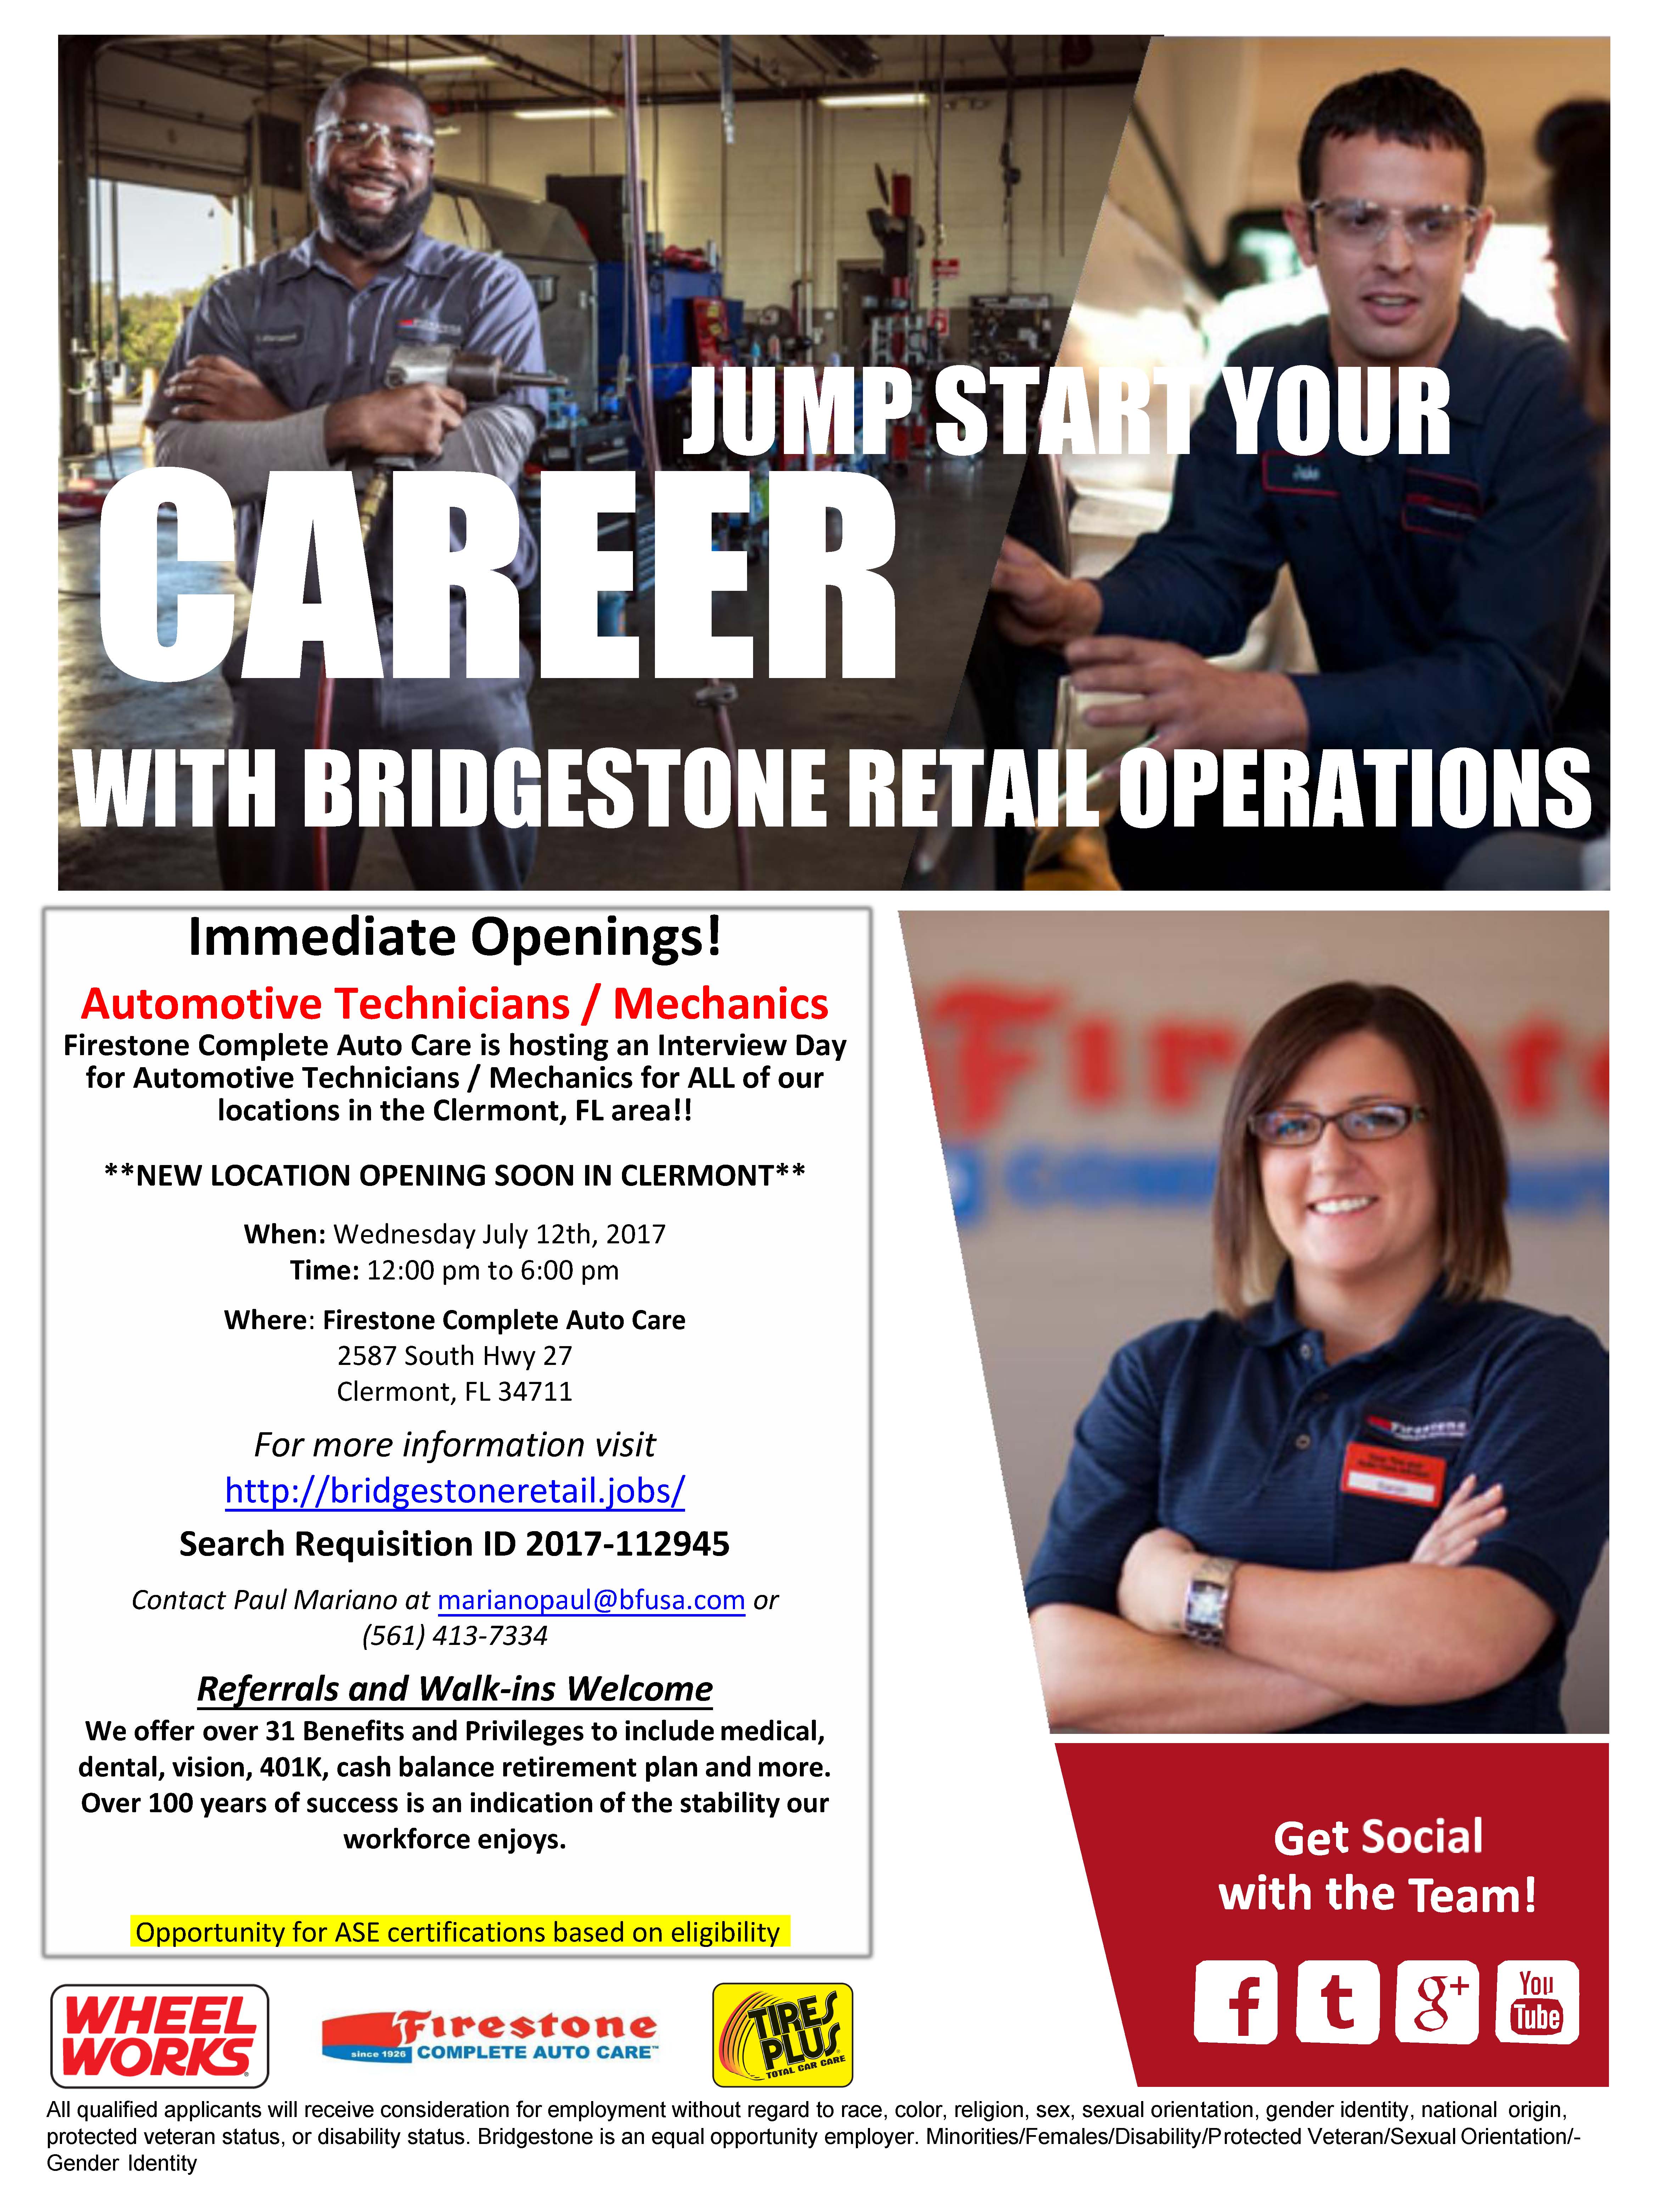 Bridgestone Retail Operations Hiring